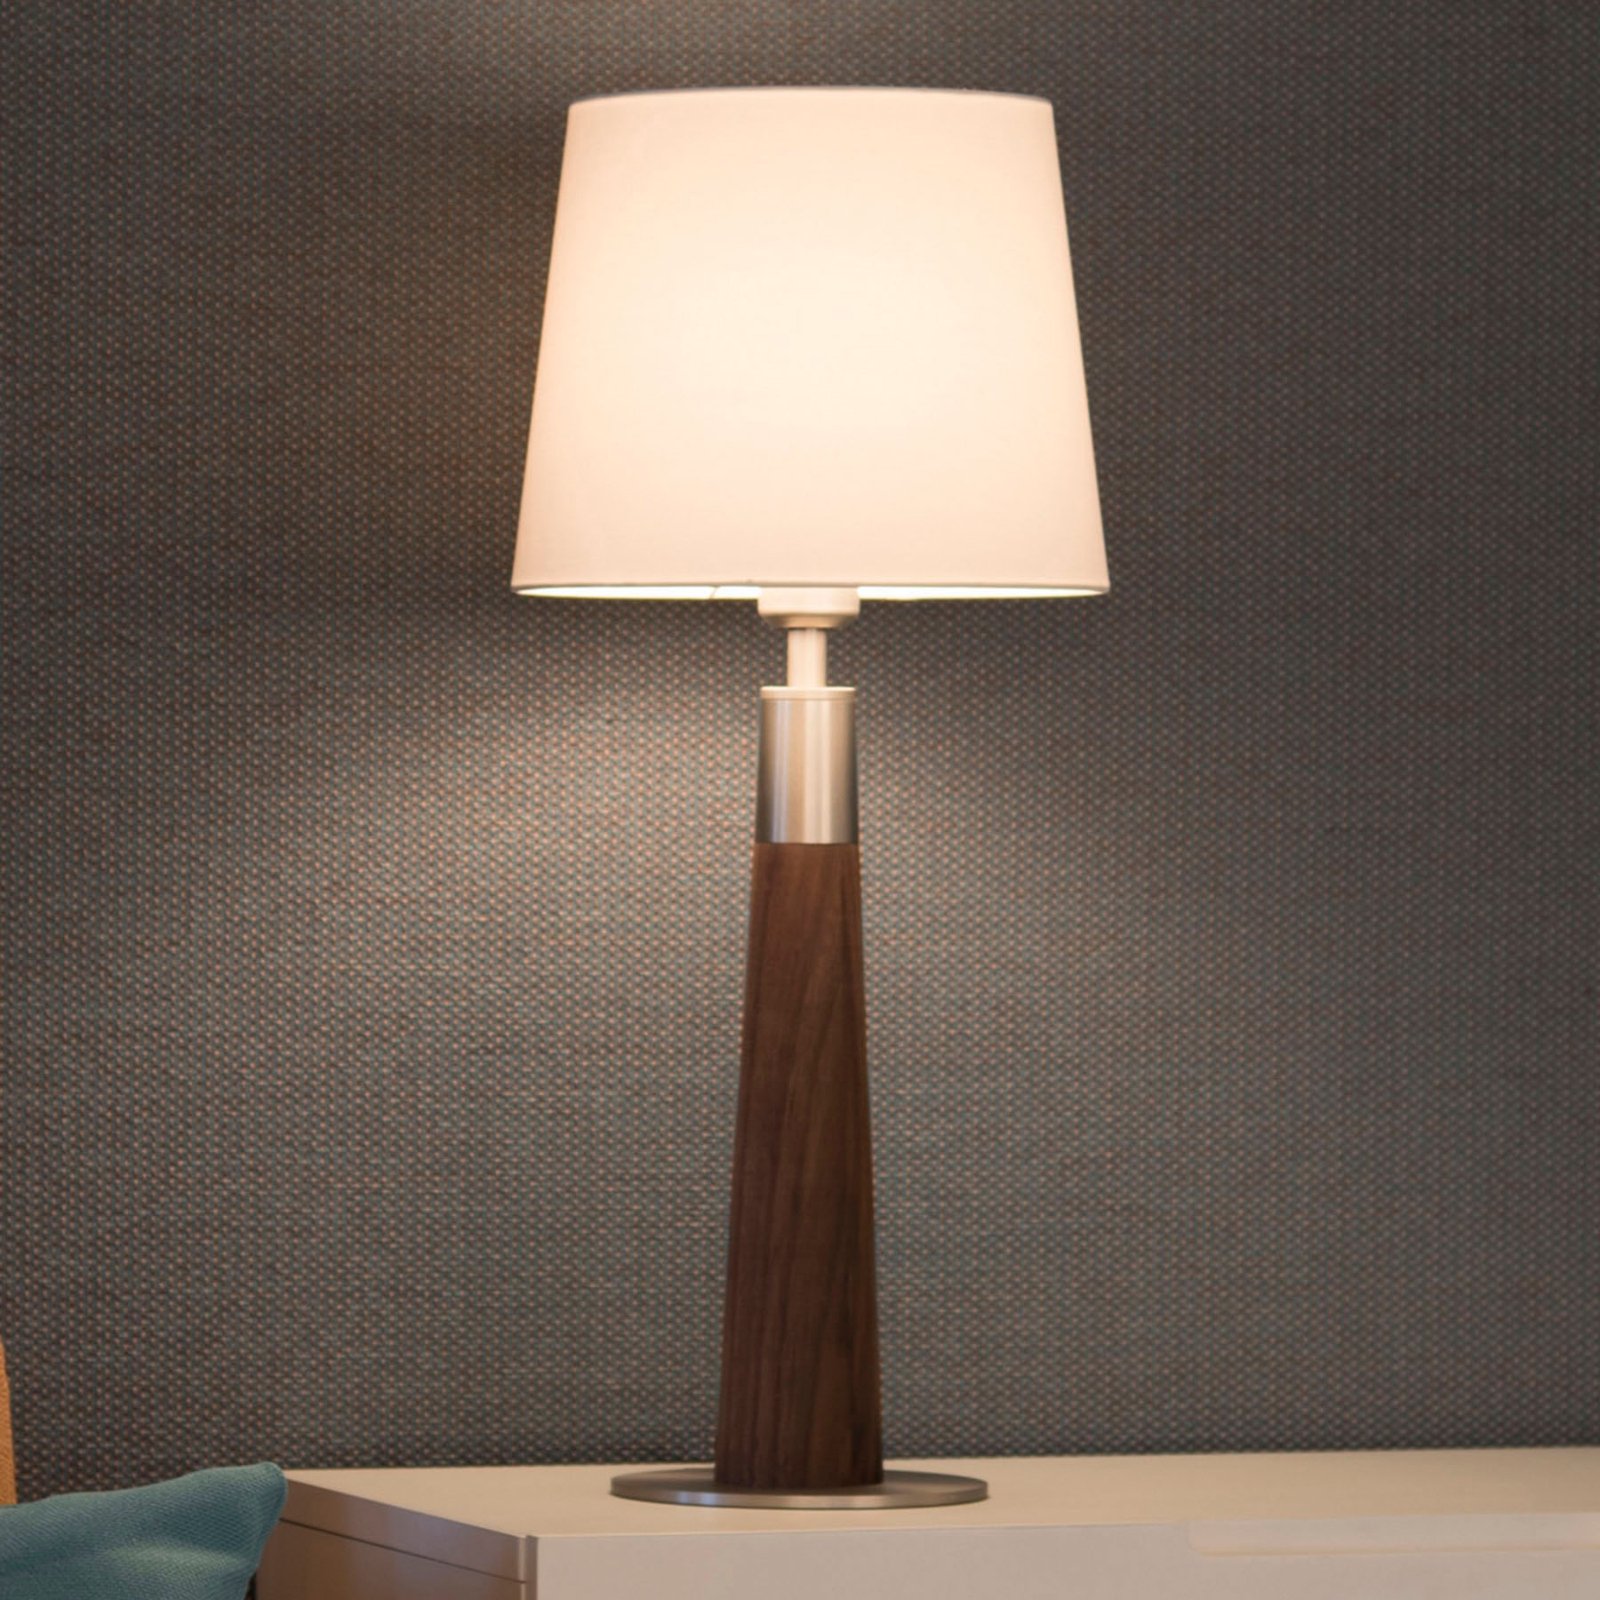 HerzBlut Conico bordlampe, hvit, valnøtt, 58 cm